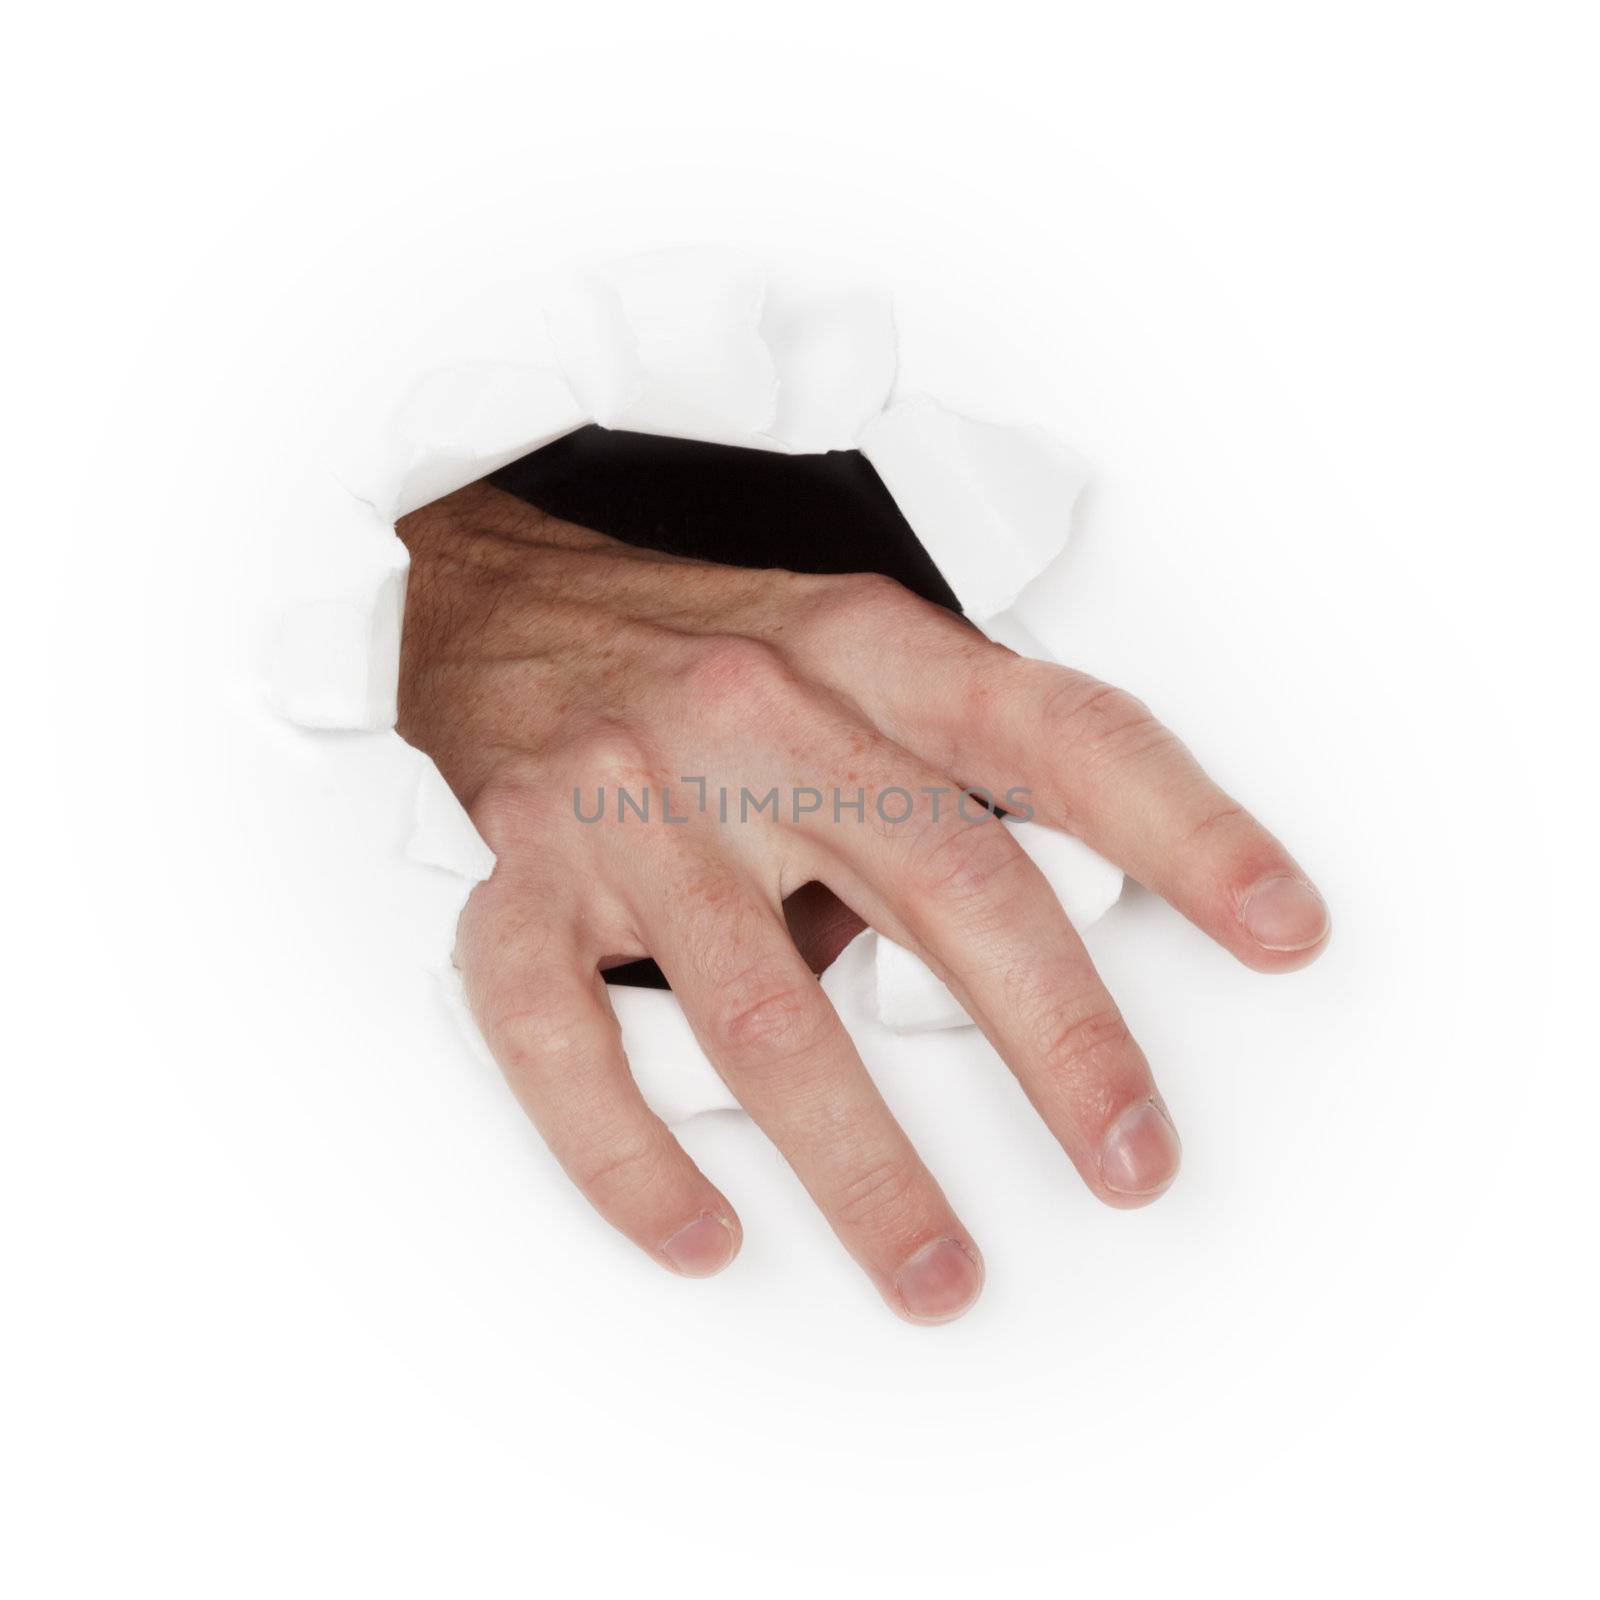 Man's hand breaks through the white paper